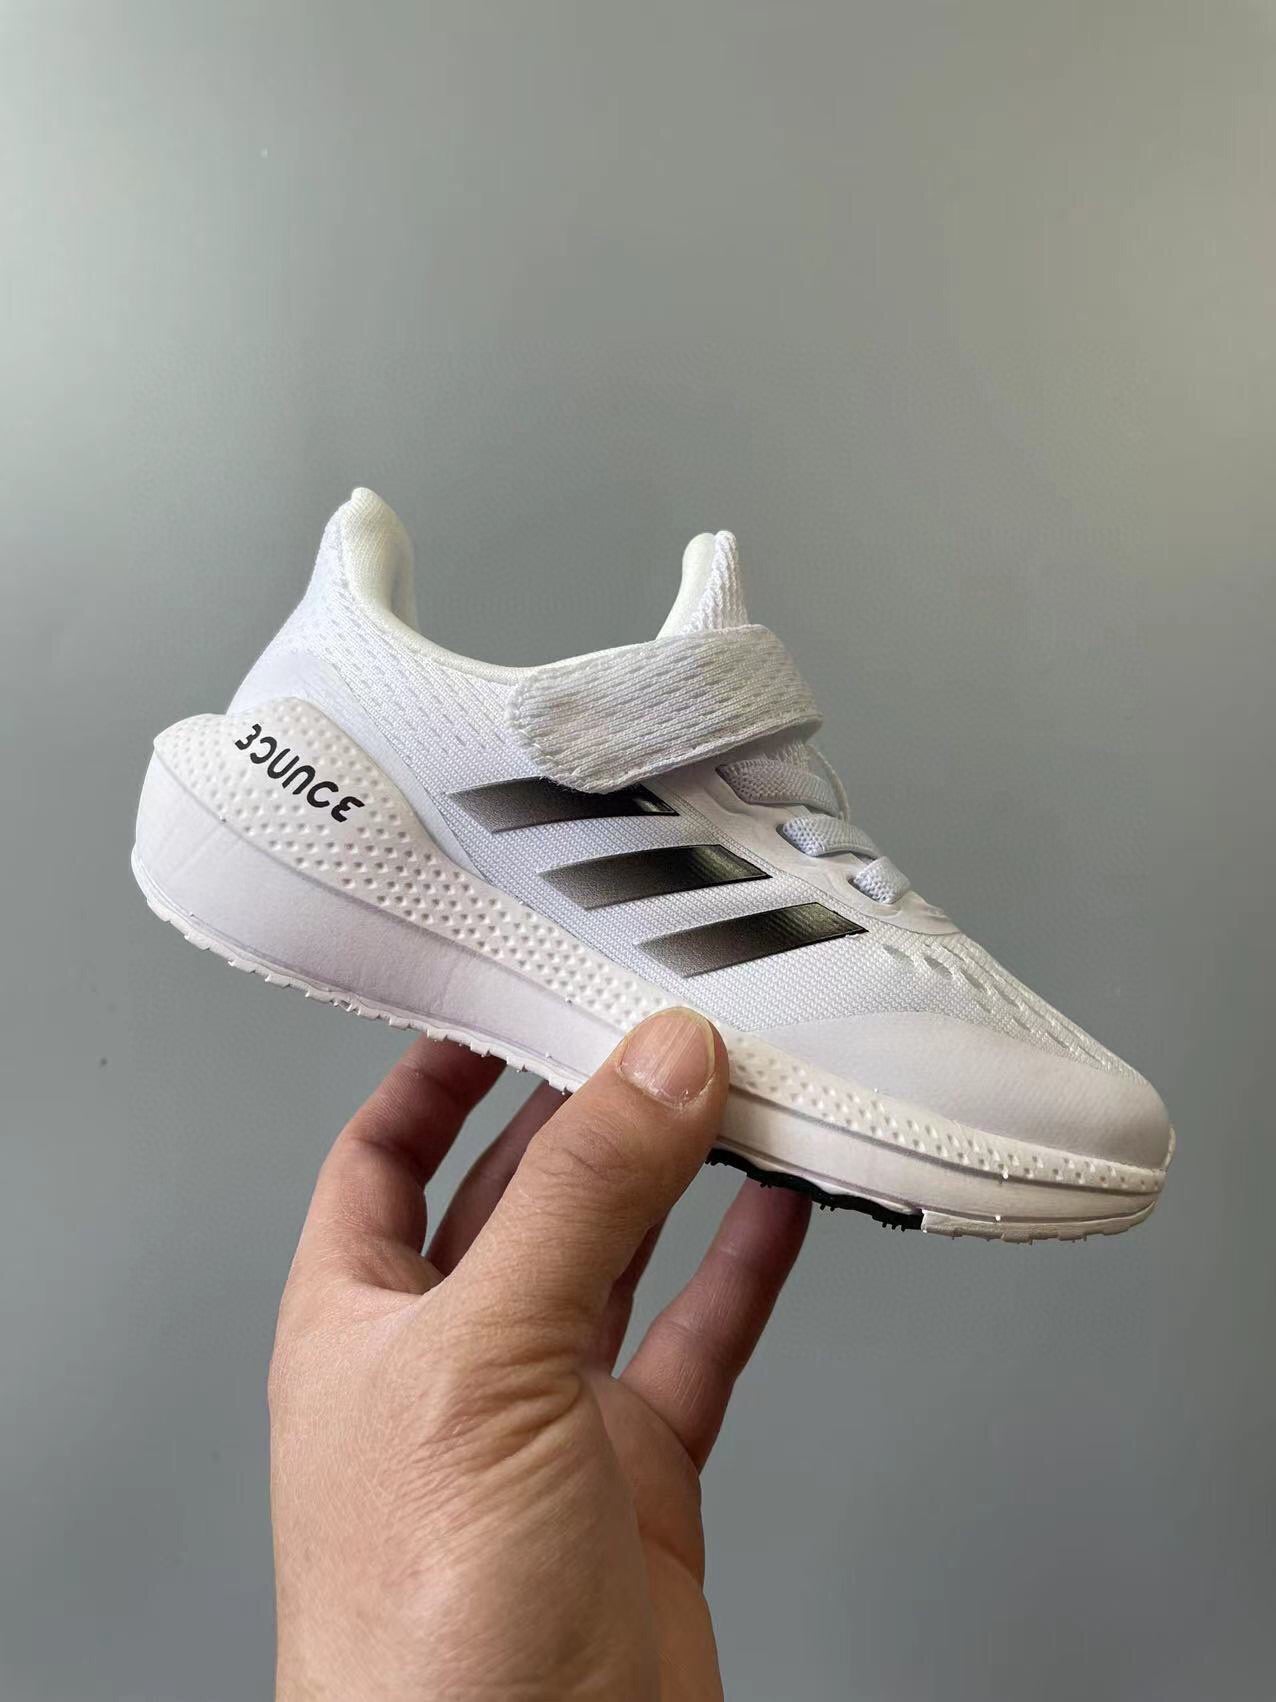 Adidas ultraboost black/white